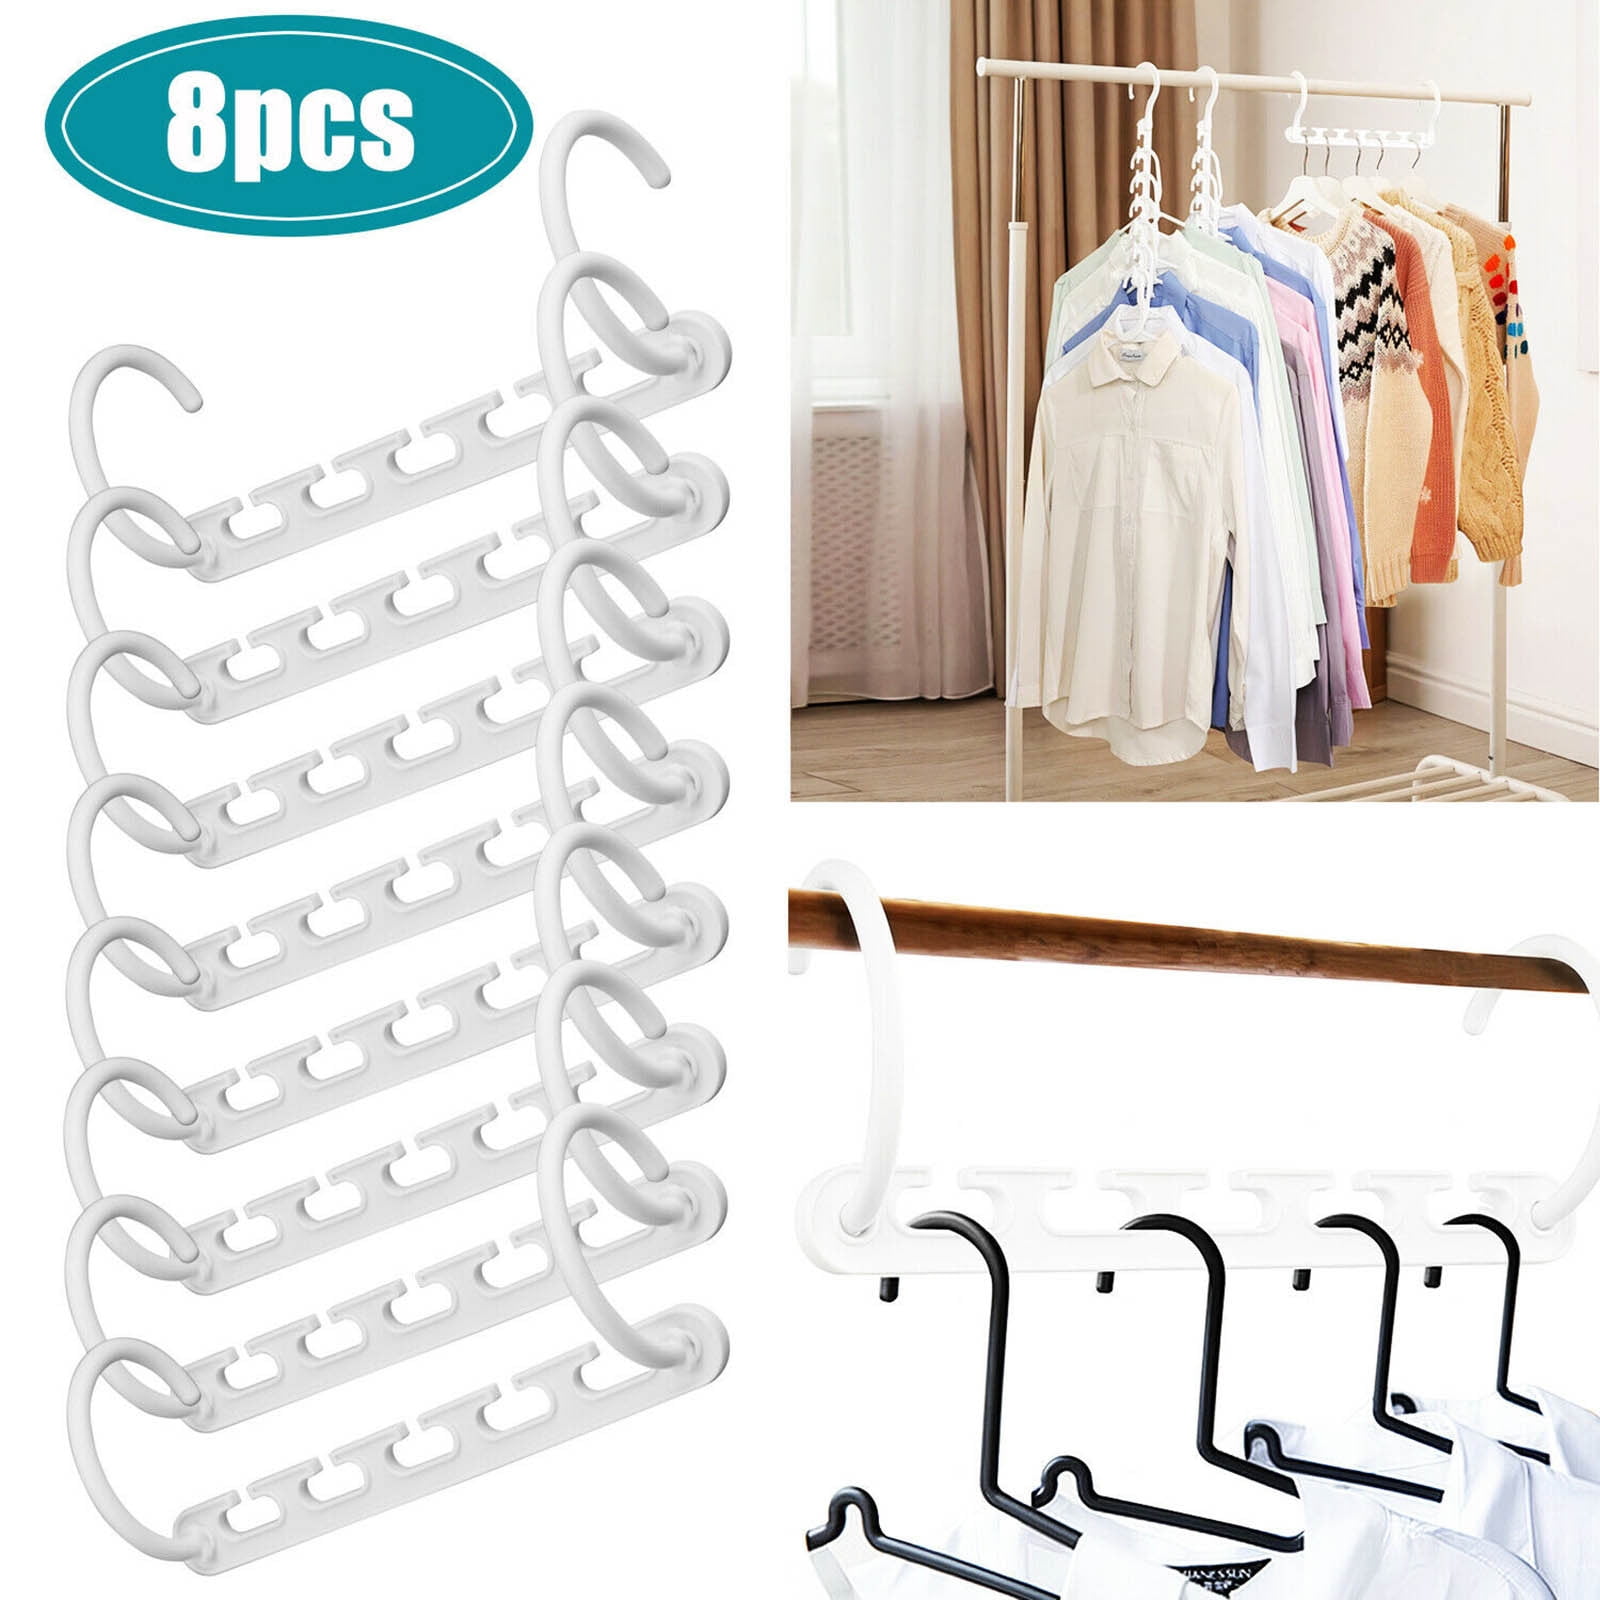 8pcs Wonder Closet Organizer Space Saver Magic Hanger Clothing Rack Clothes Hook 